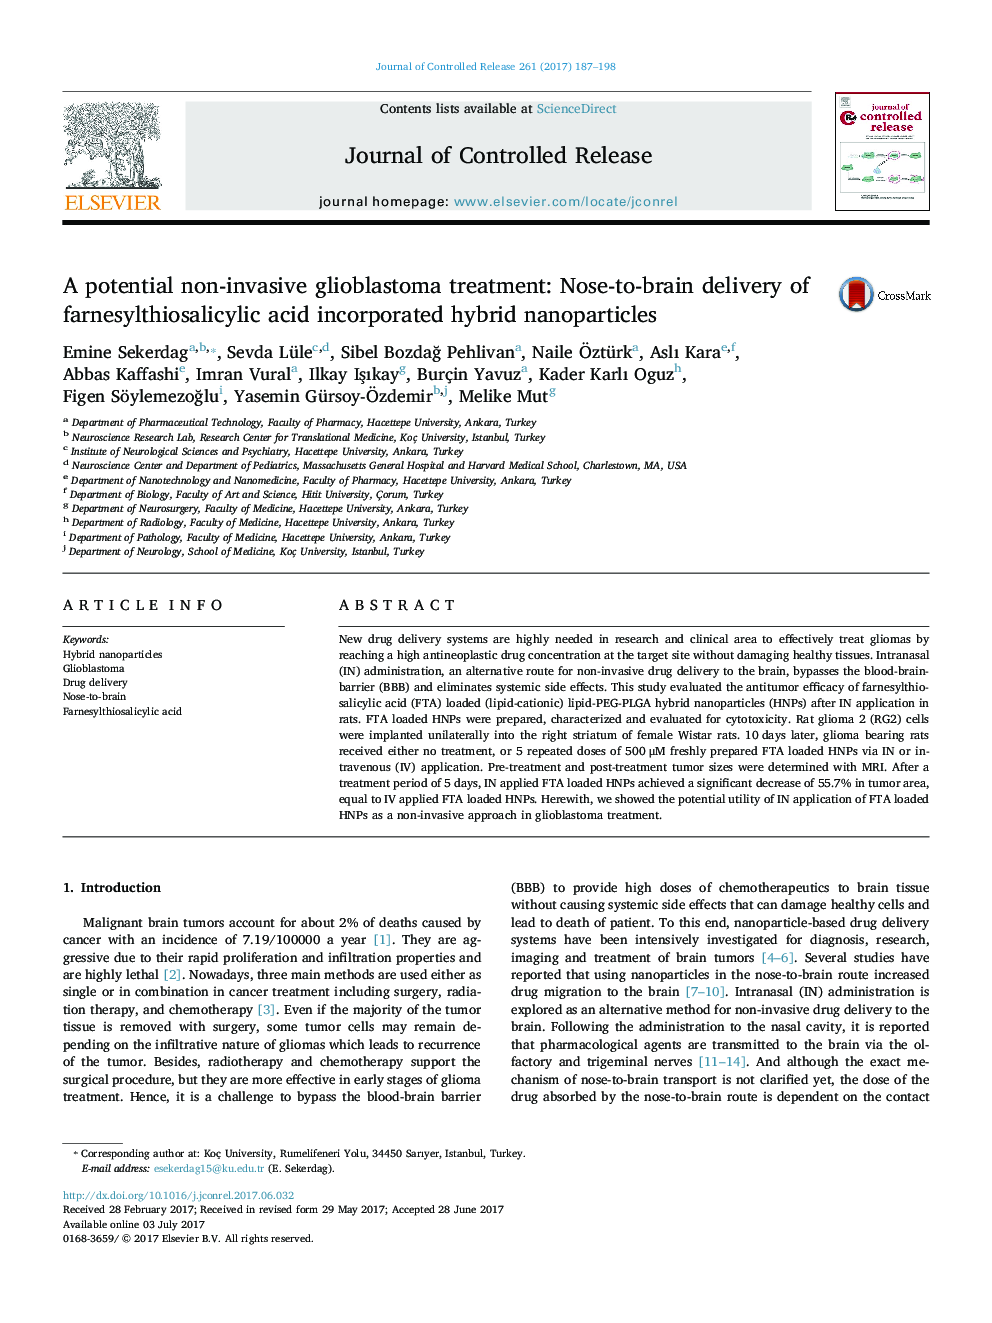 A potential non-invasive glioblastoma treatment: Nose-to-brain delivery of farnesylthiosalicylic acid incorporated hybrid nanoparticles